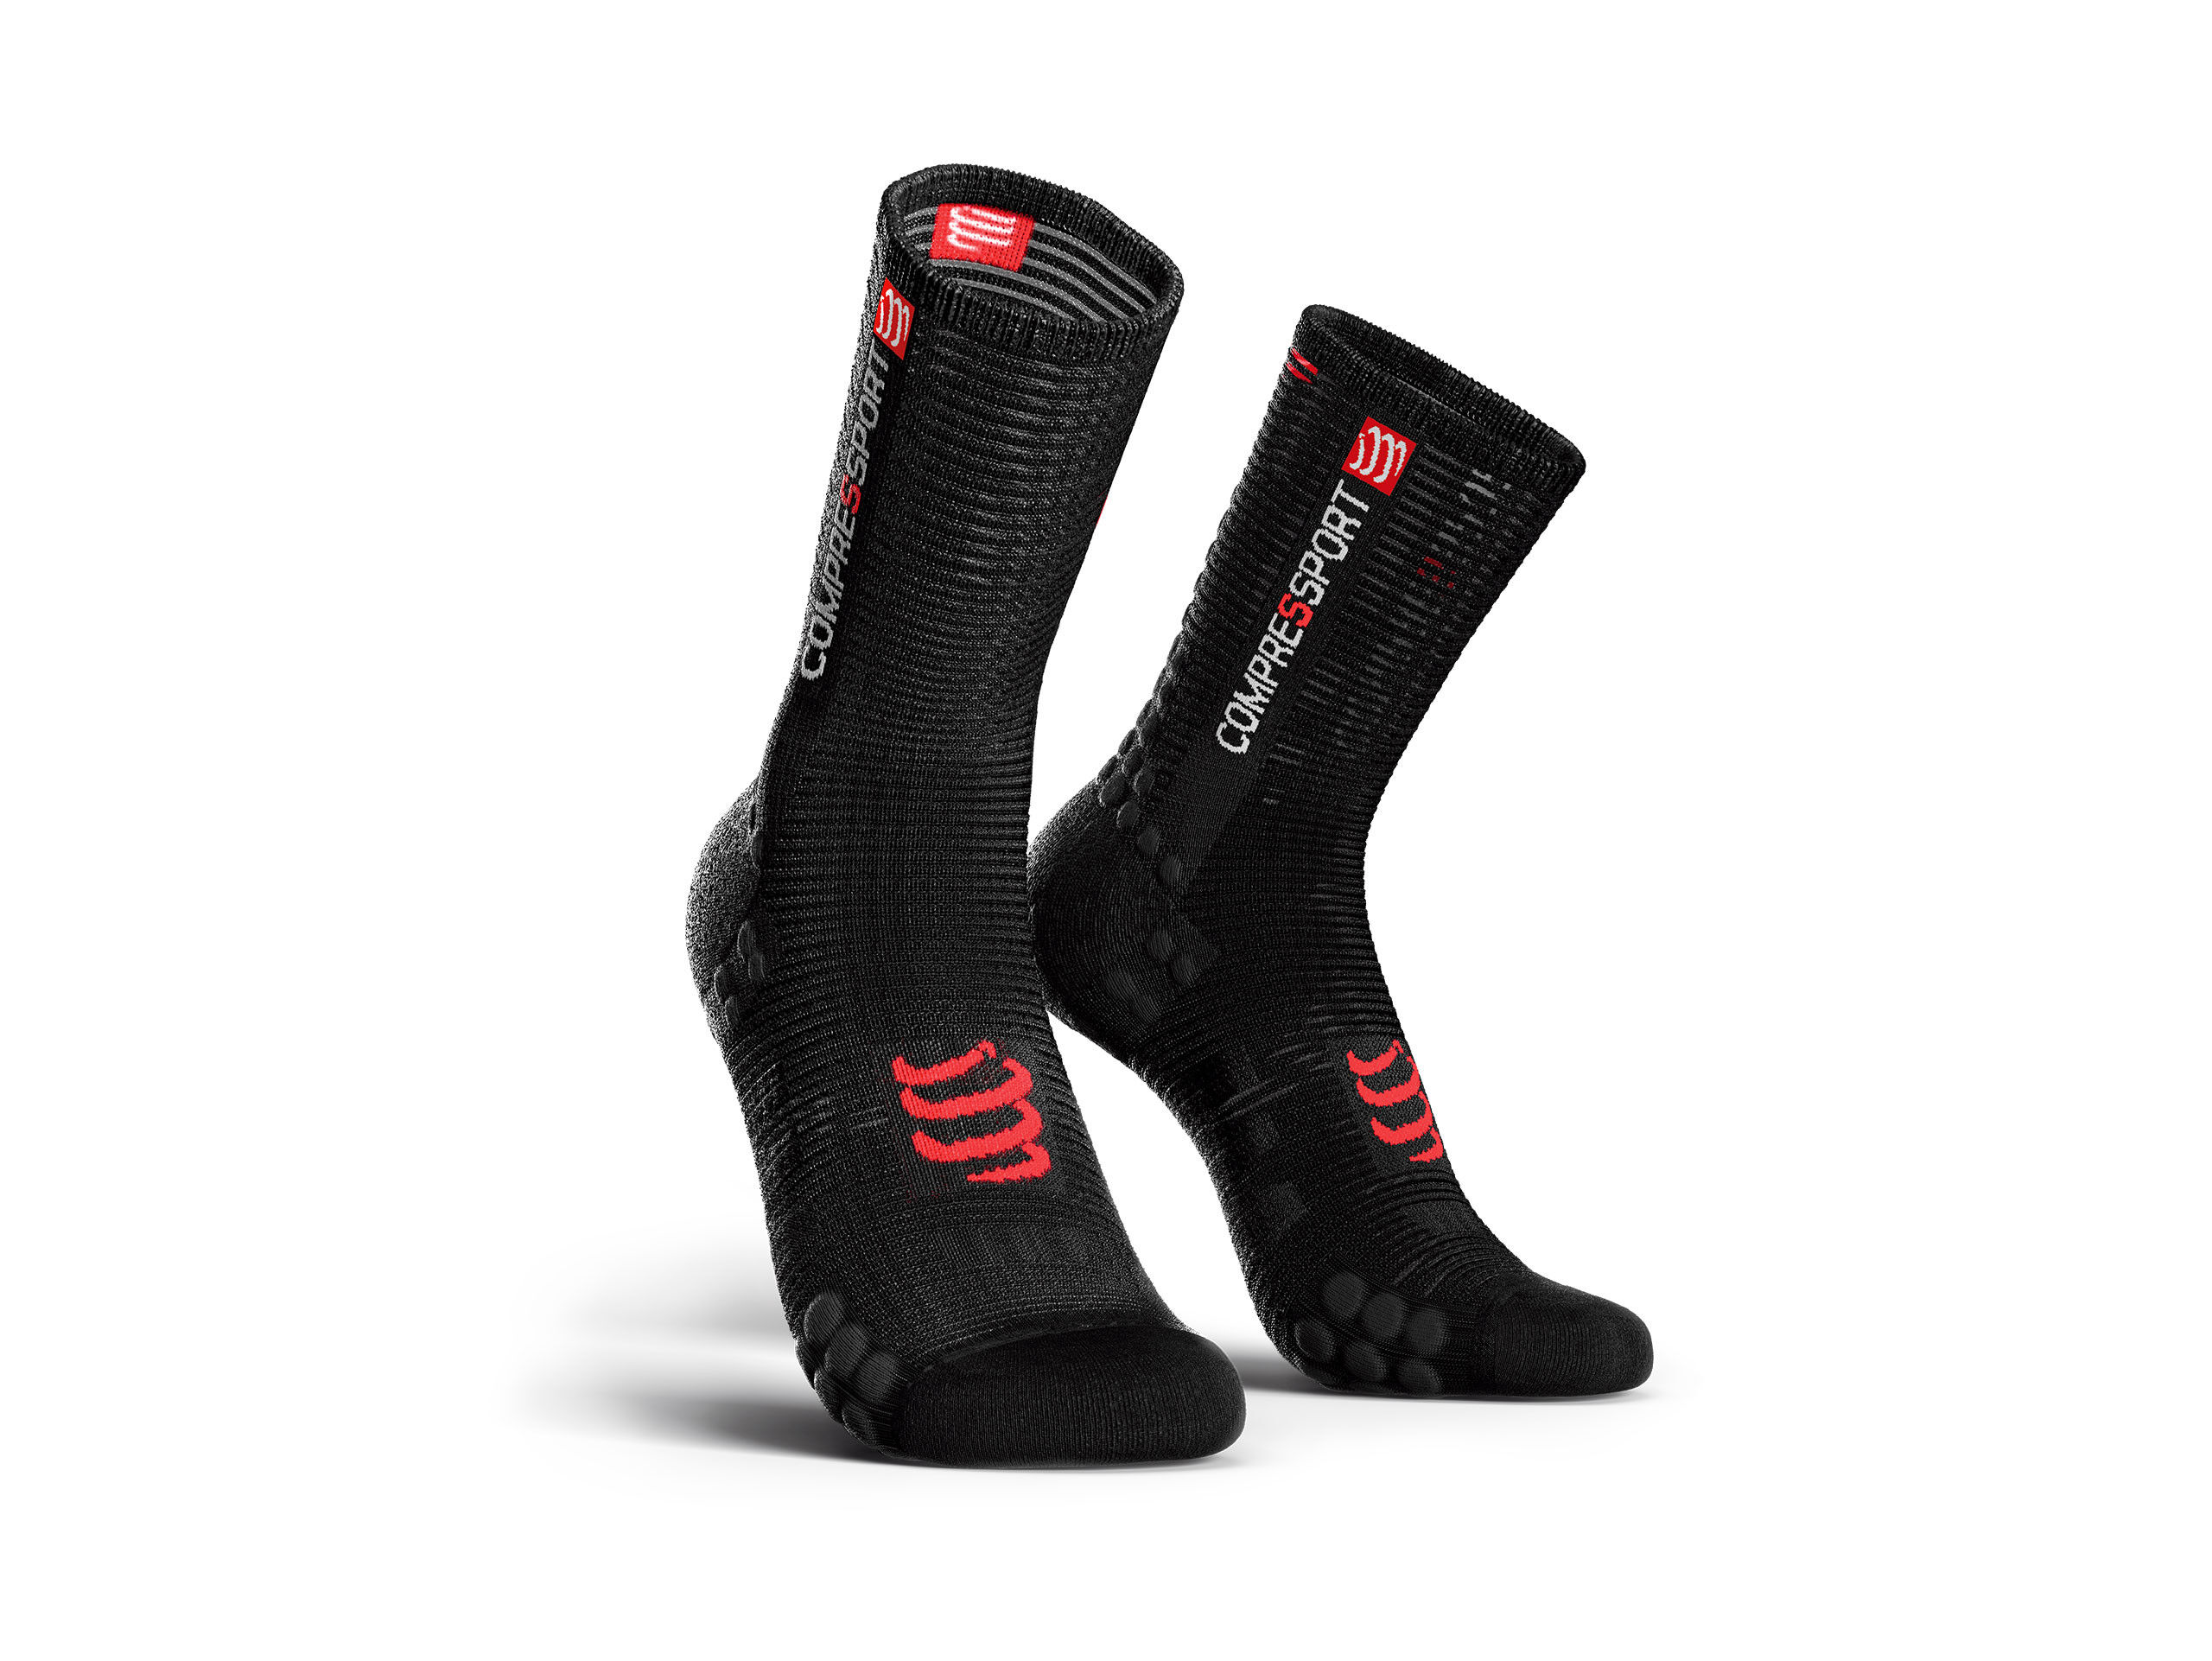 Compressport Pro Racing Socks v3.0 Bike - Cycling socks